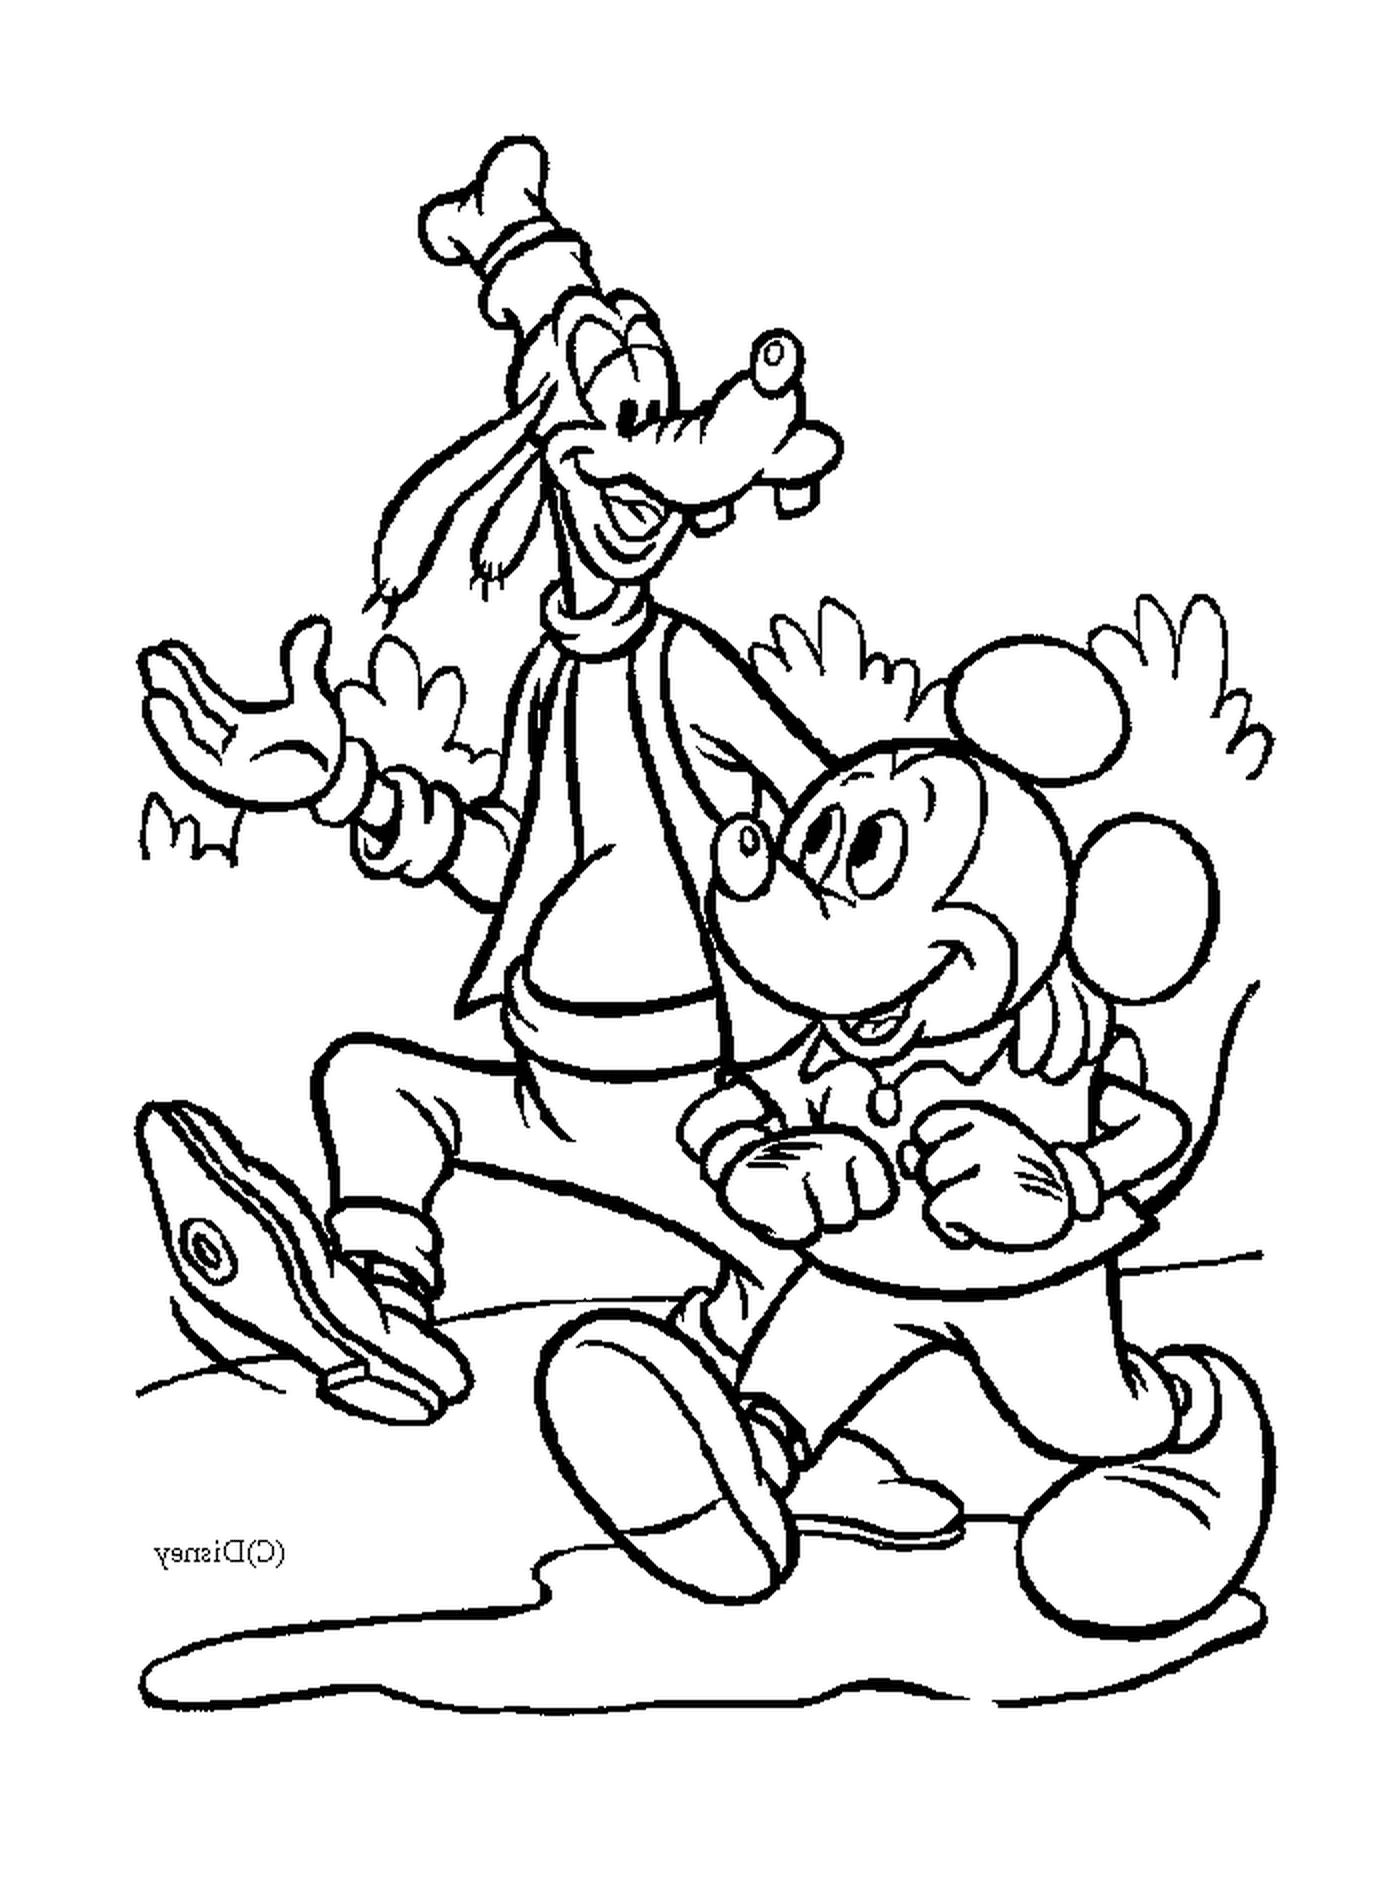  Mickey and his friend Dingo walk: Mickey and Dingo 